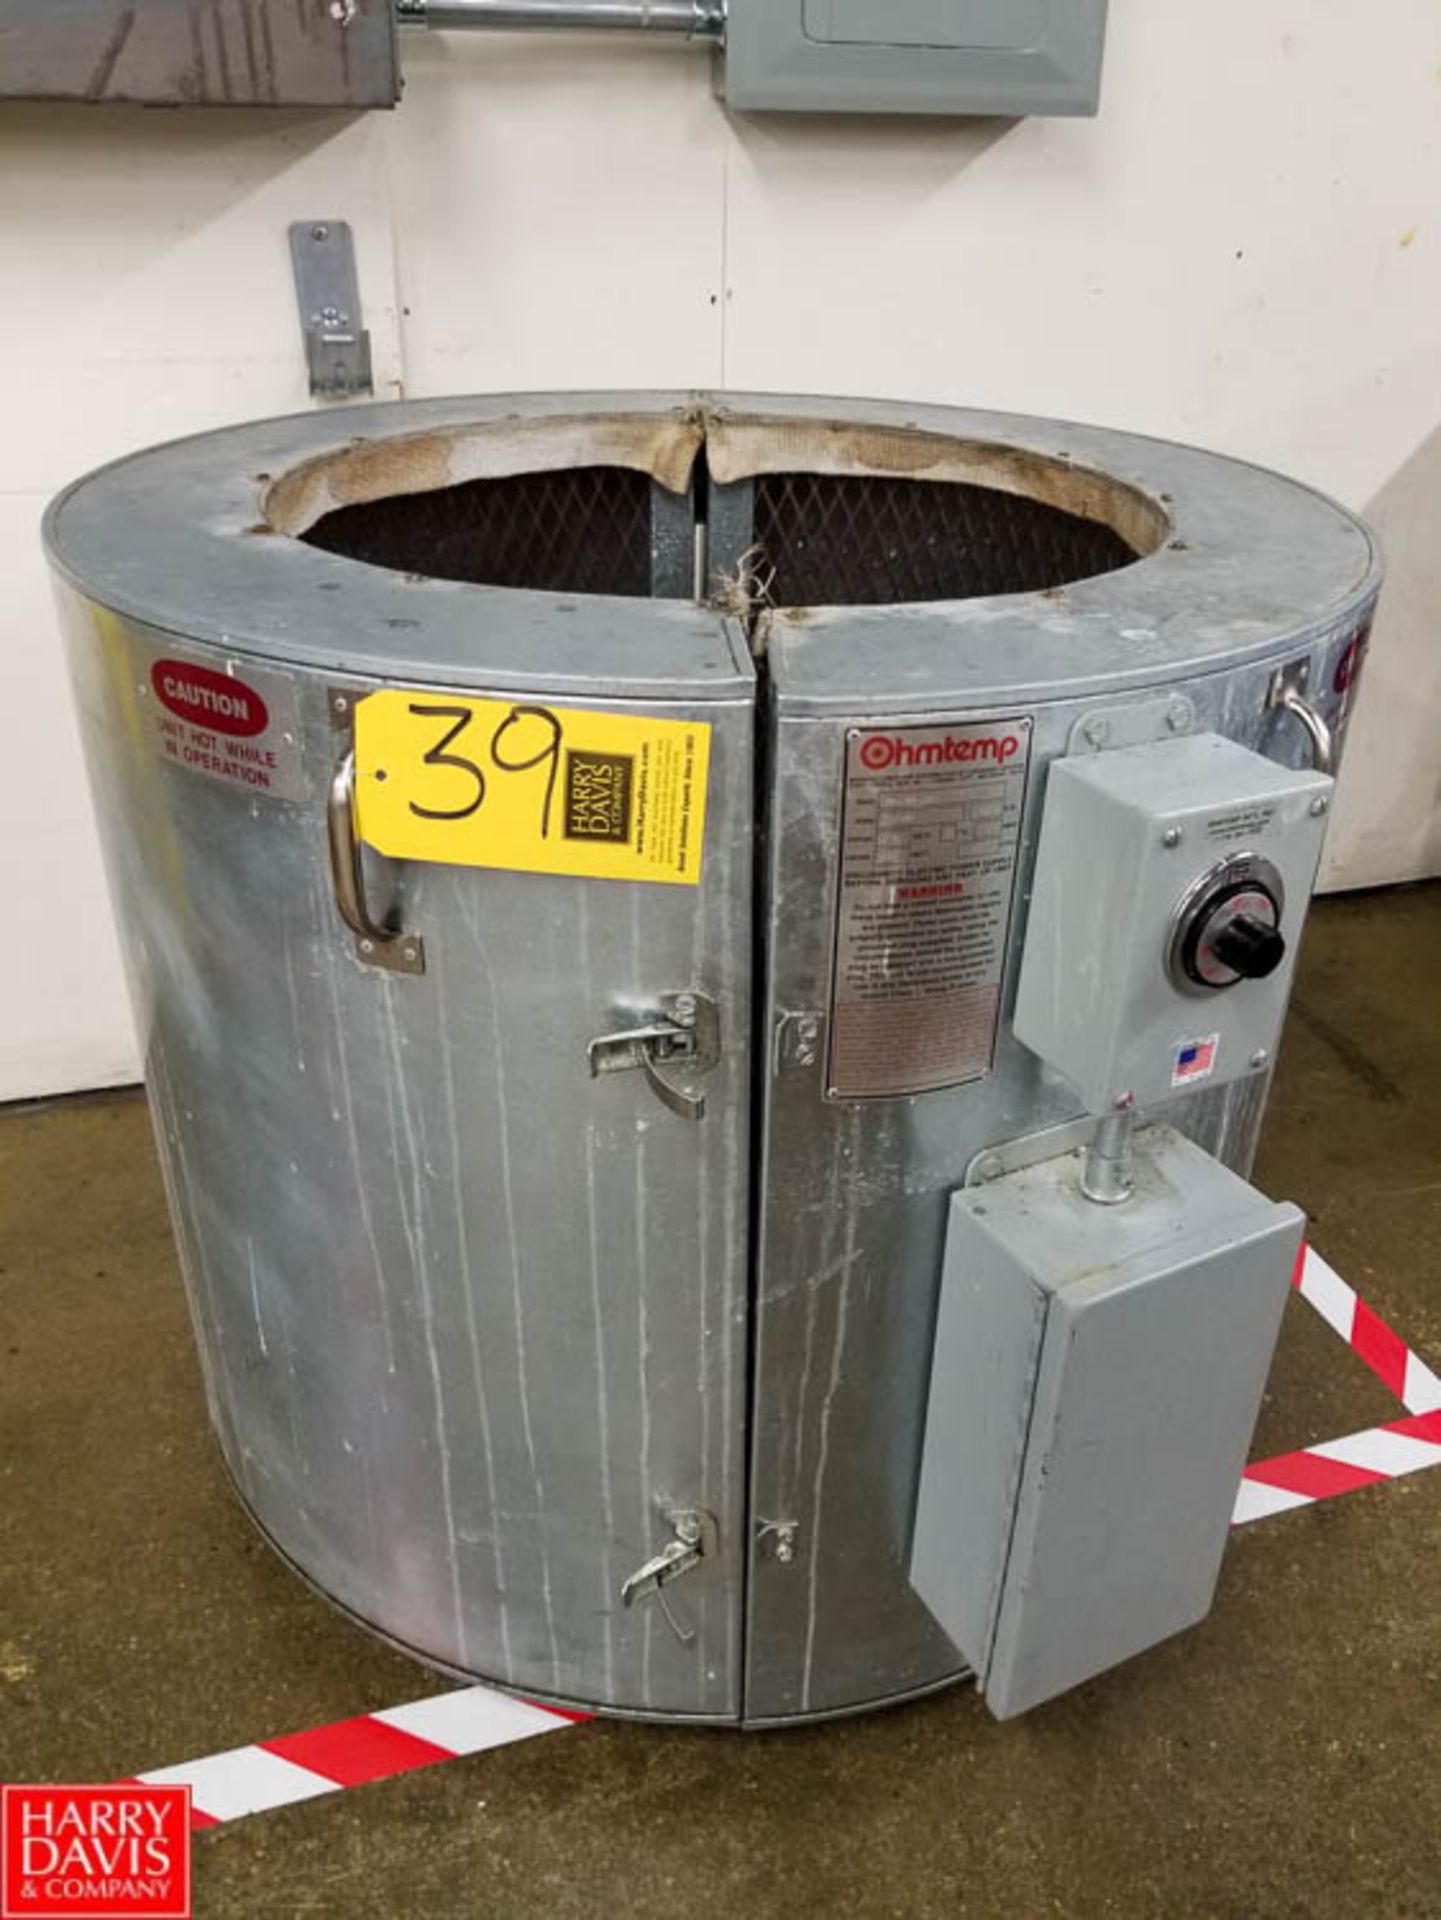 Ohmtemp Clamshell Barrel Heater 230 V, 3 Ph., 60 Hz Model: SWL-55-2303 SN: 11-180 Rigging Fee: $150